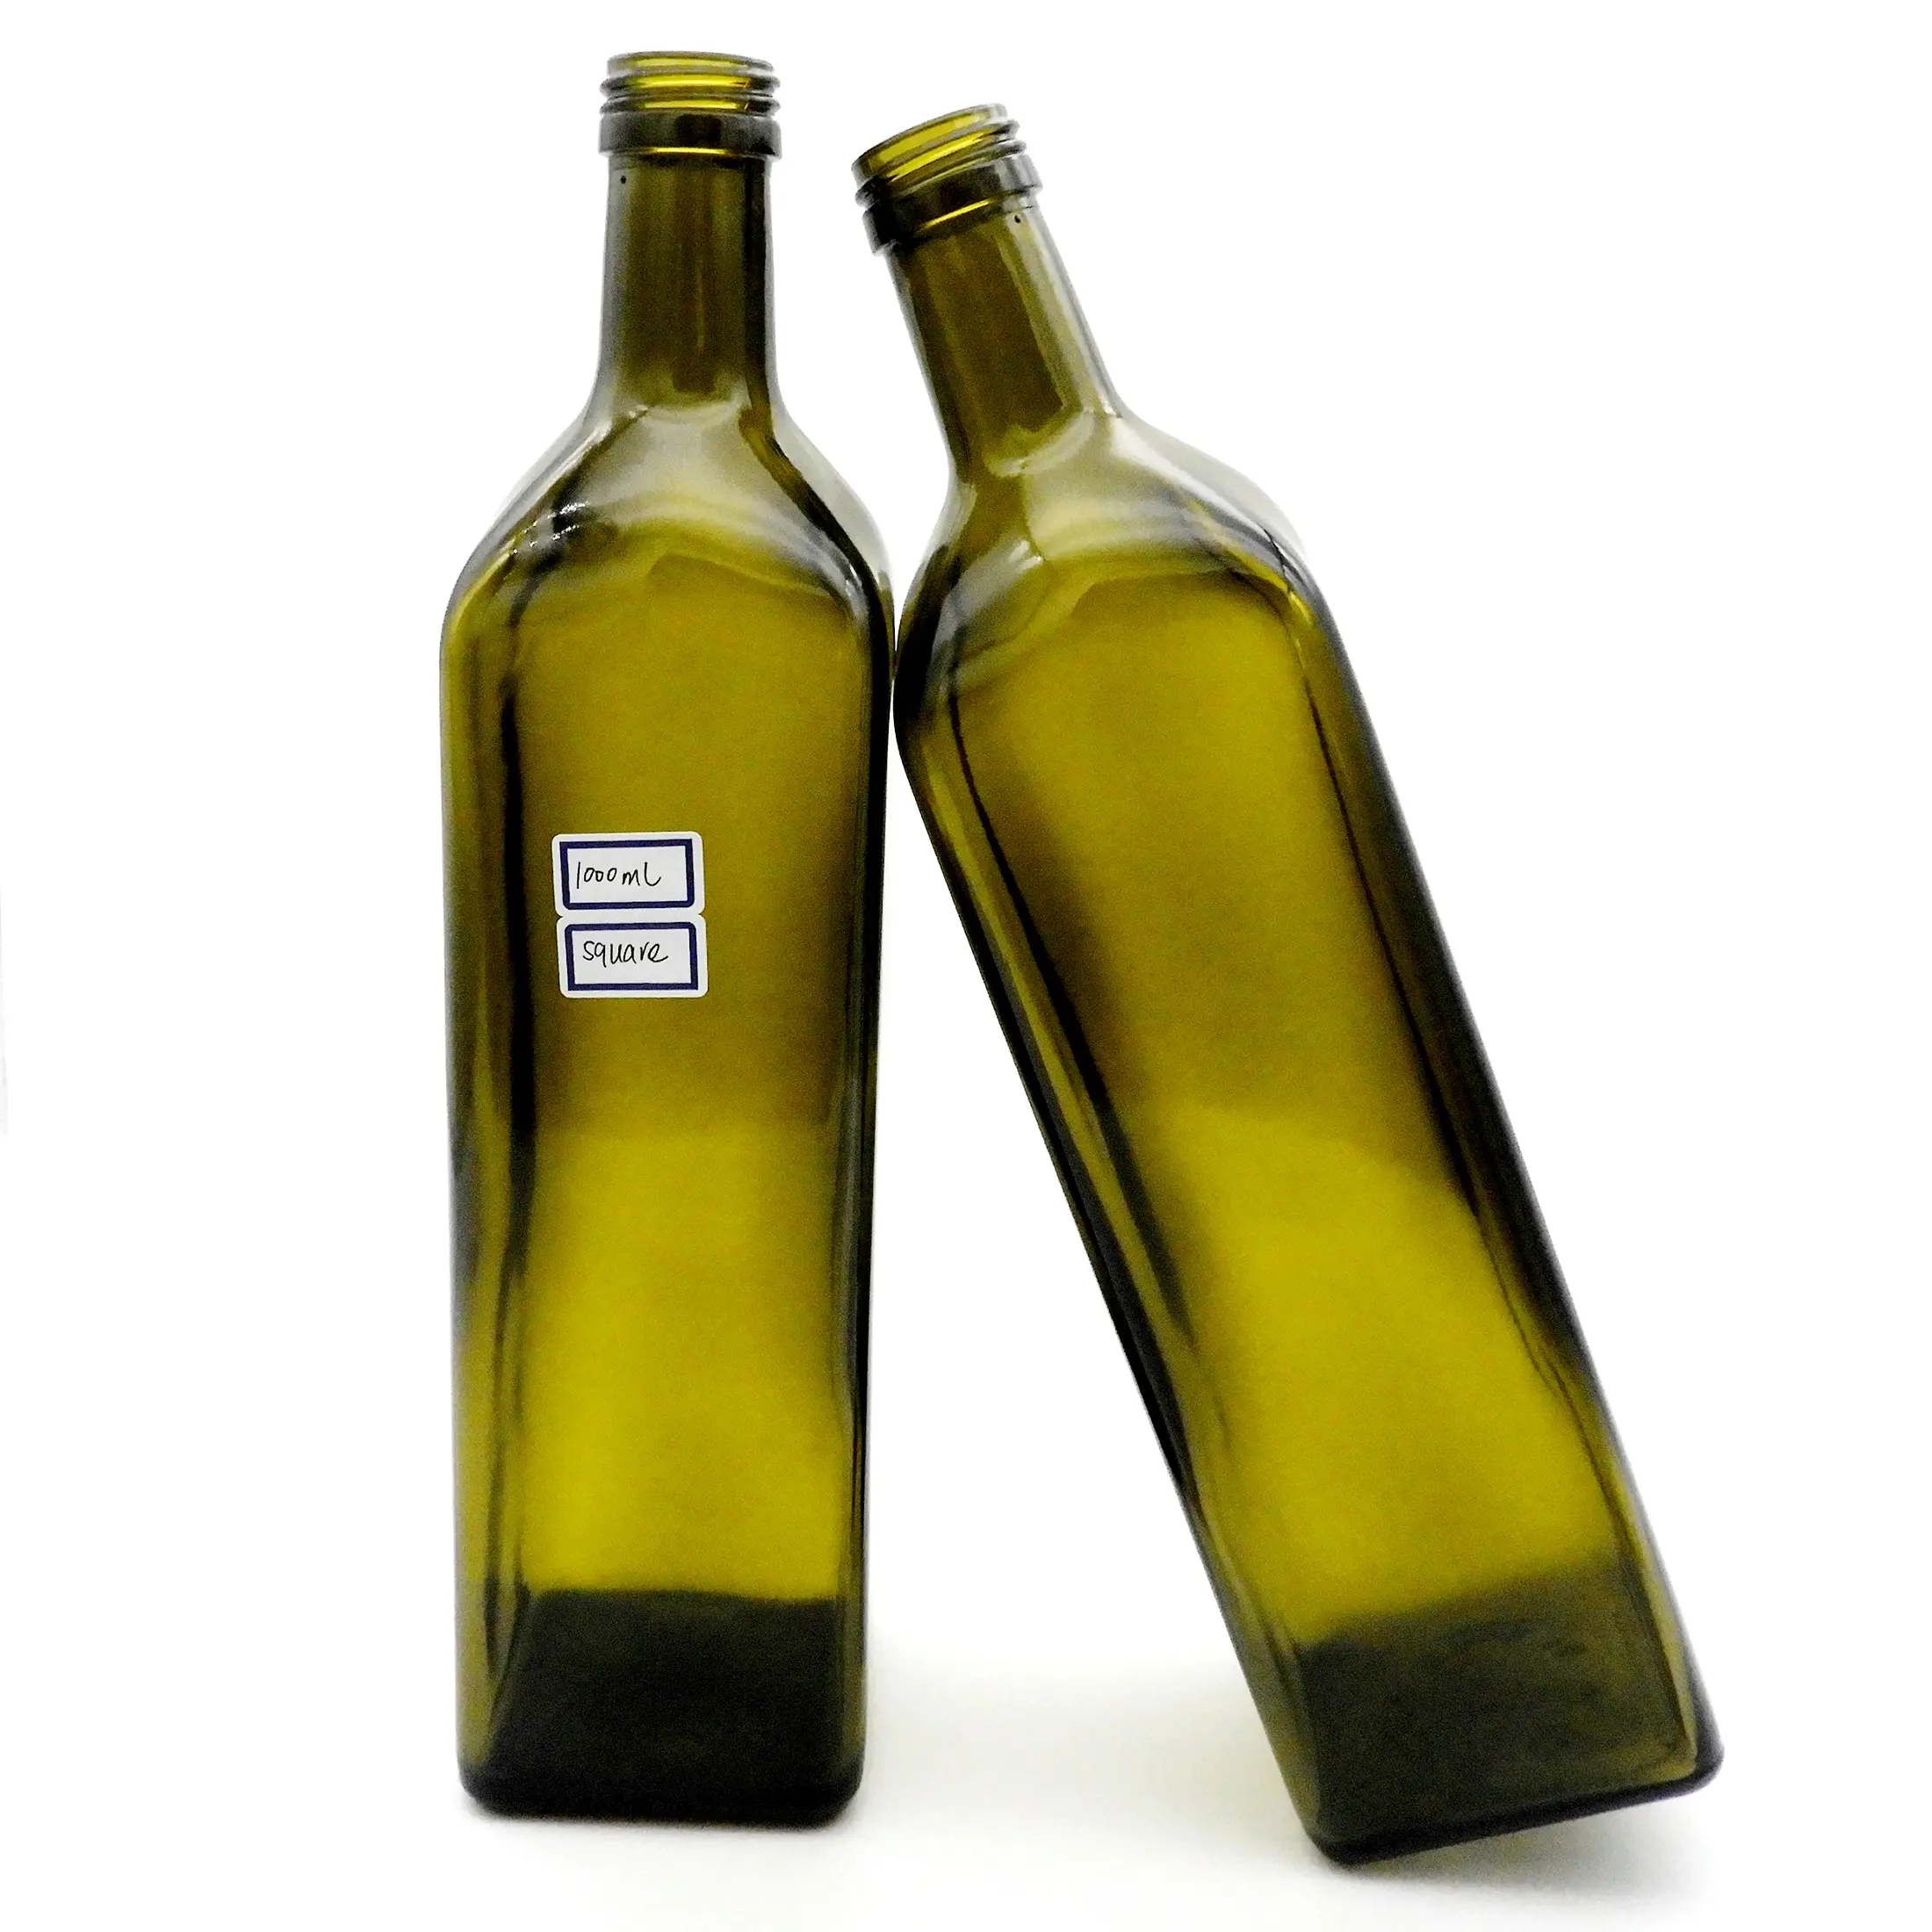 1000 мл стеклянная бутылка оливкового масла производитель 1 литровая бутылка оливкового масла Marasca оптом